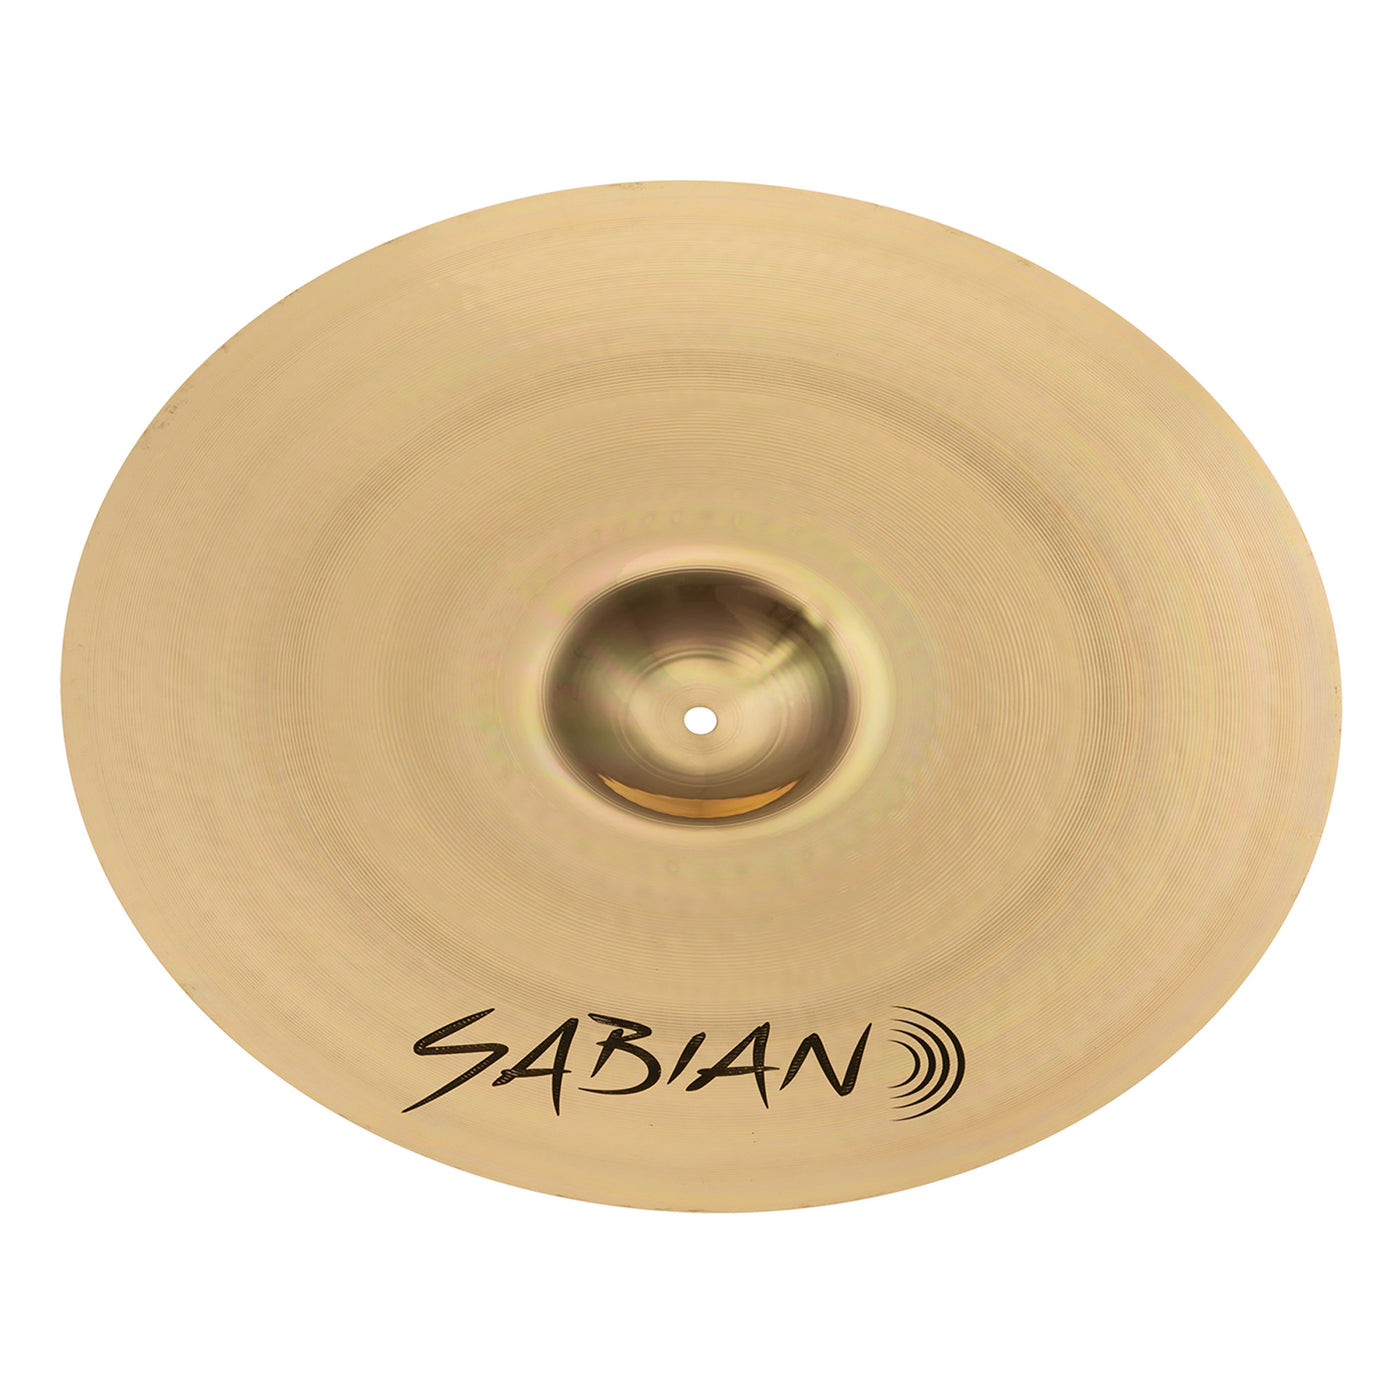 Sabian 20" XSR Ride Cymbal - Brilliant Finish